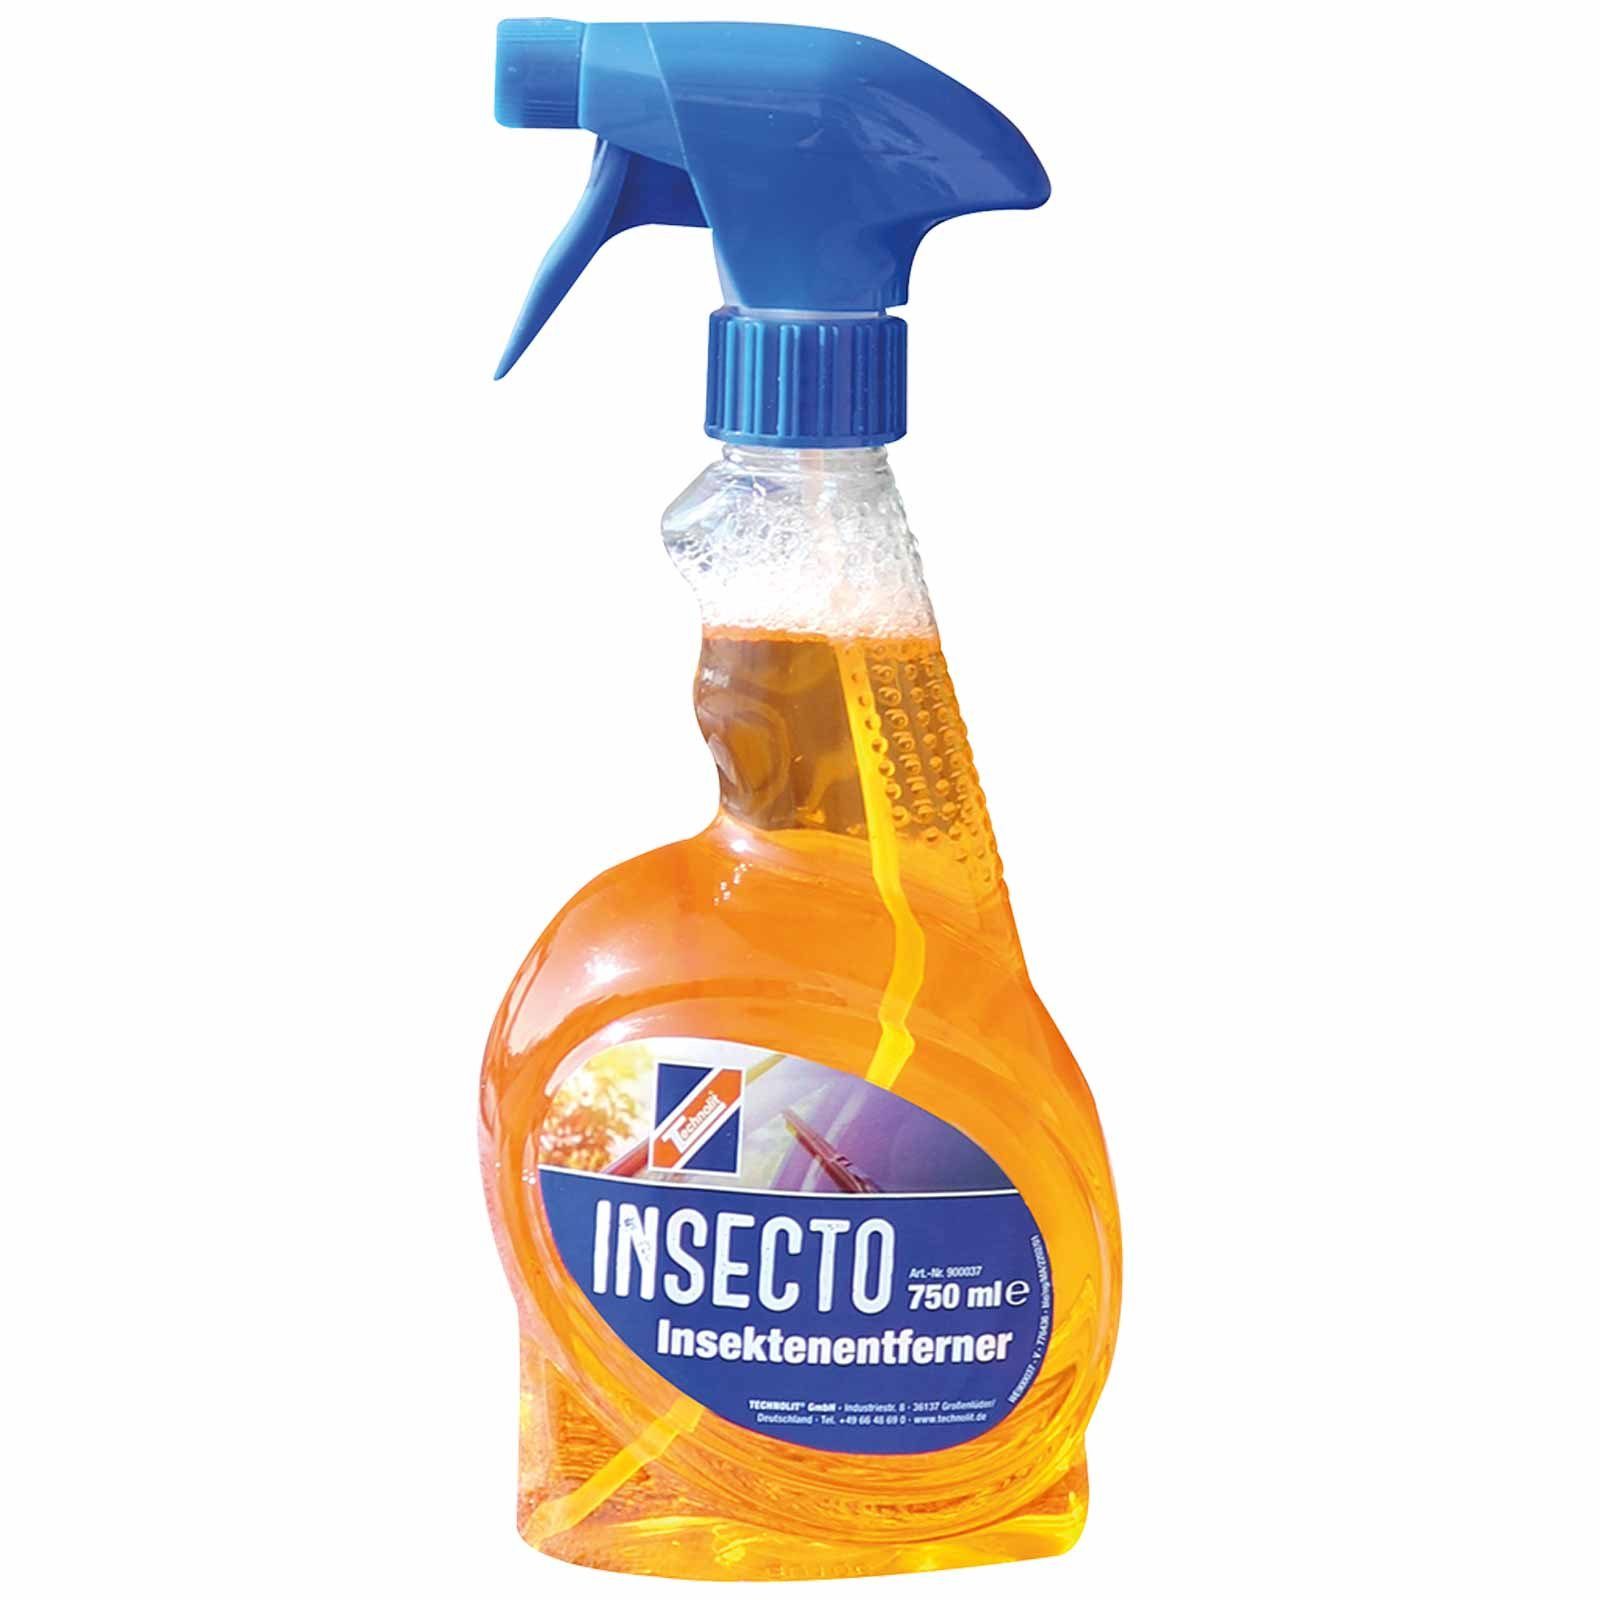 TECHNOLIT® Insektenentferner Insecto Insektenentferner | Insektenentferner